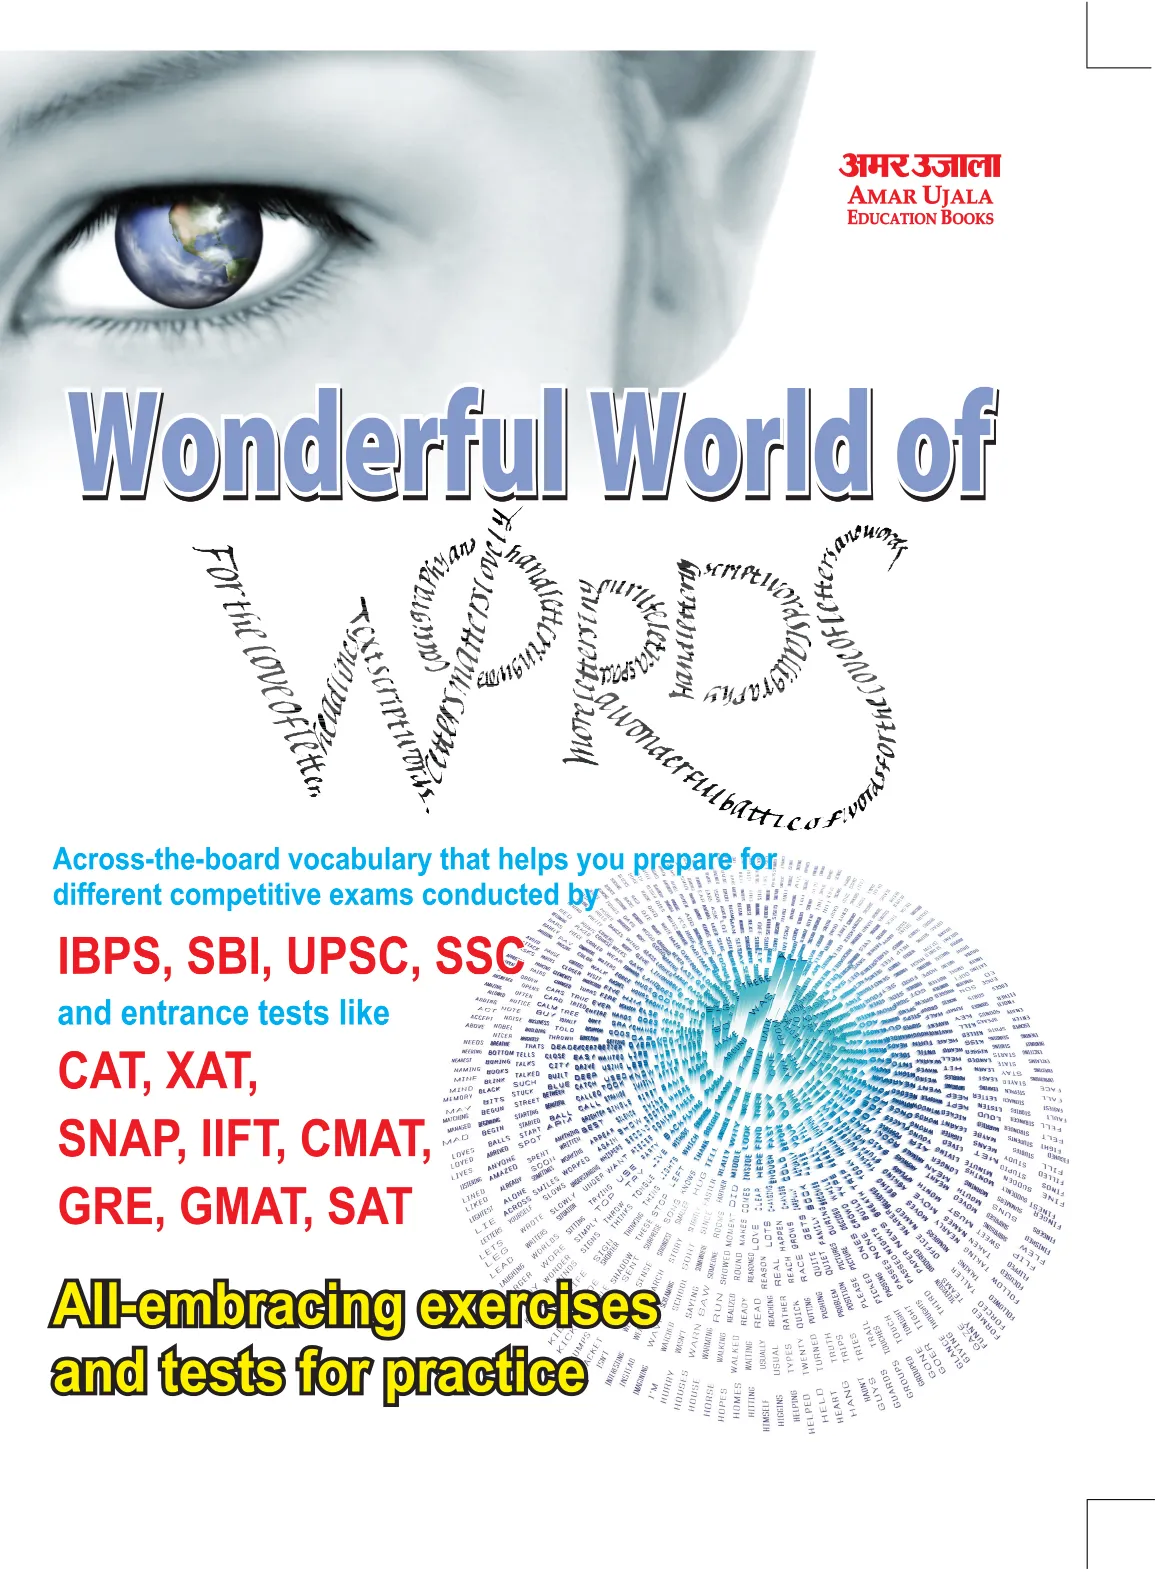 Wonderful world of words